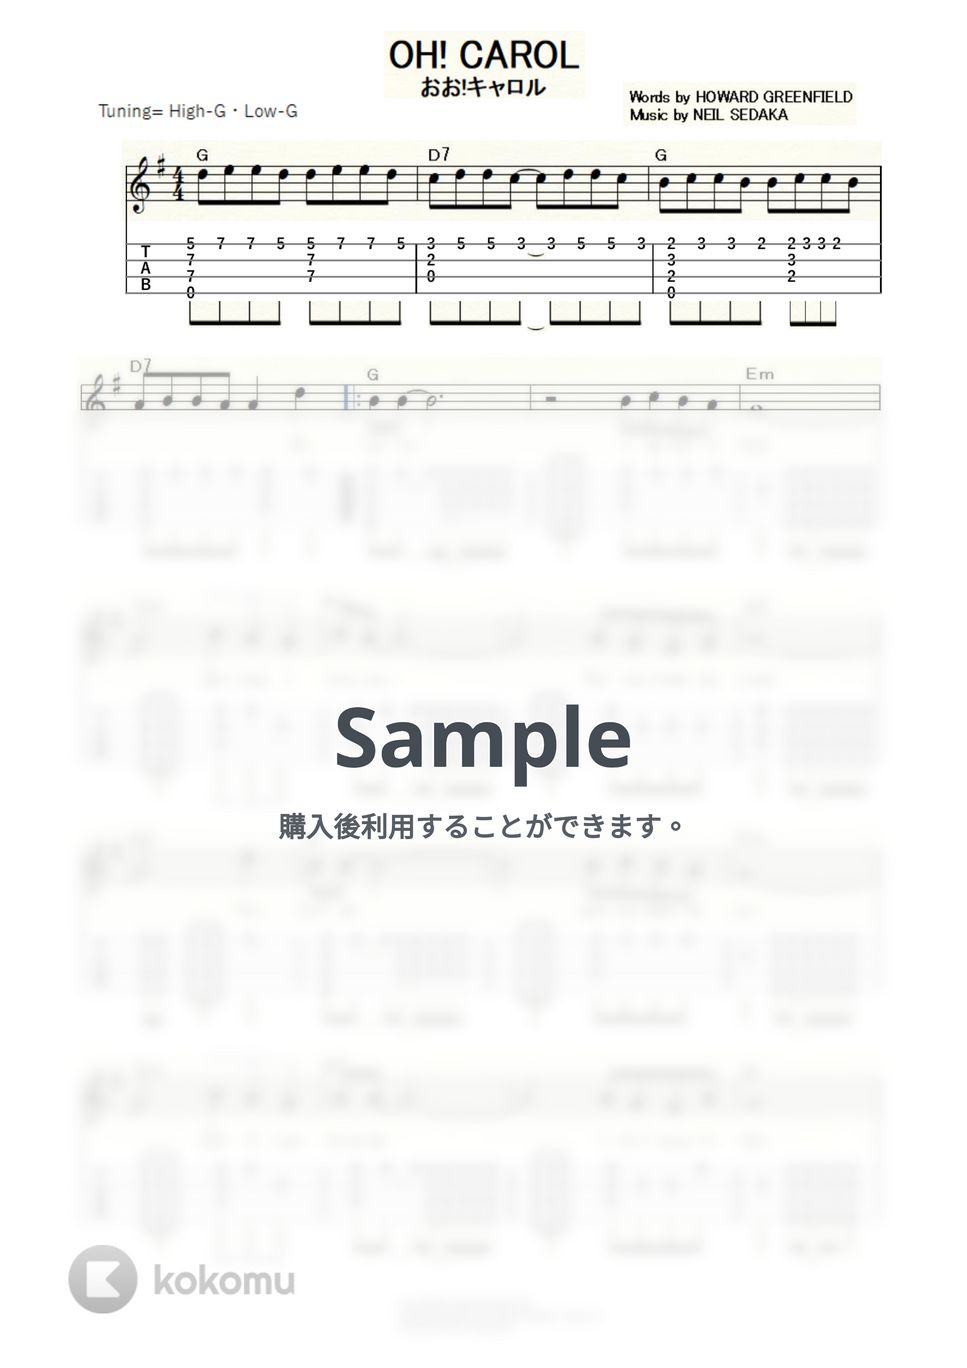 Neil Sedaka - OH! CAROL (ｳｸﾚﾚｿﾛ/High-G・Low-G/中級) by ukulelepapa